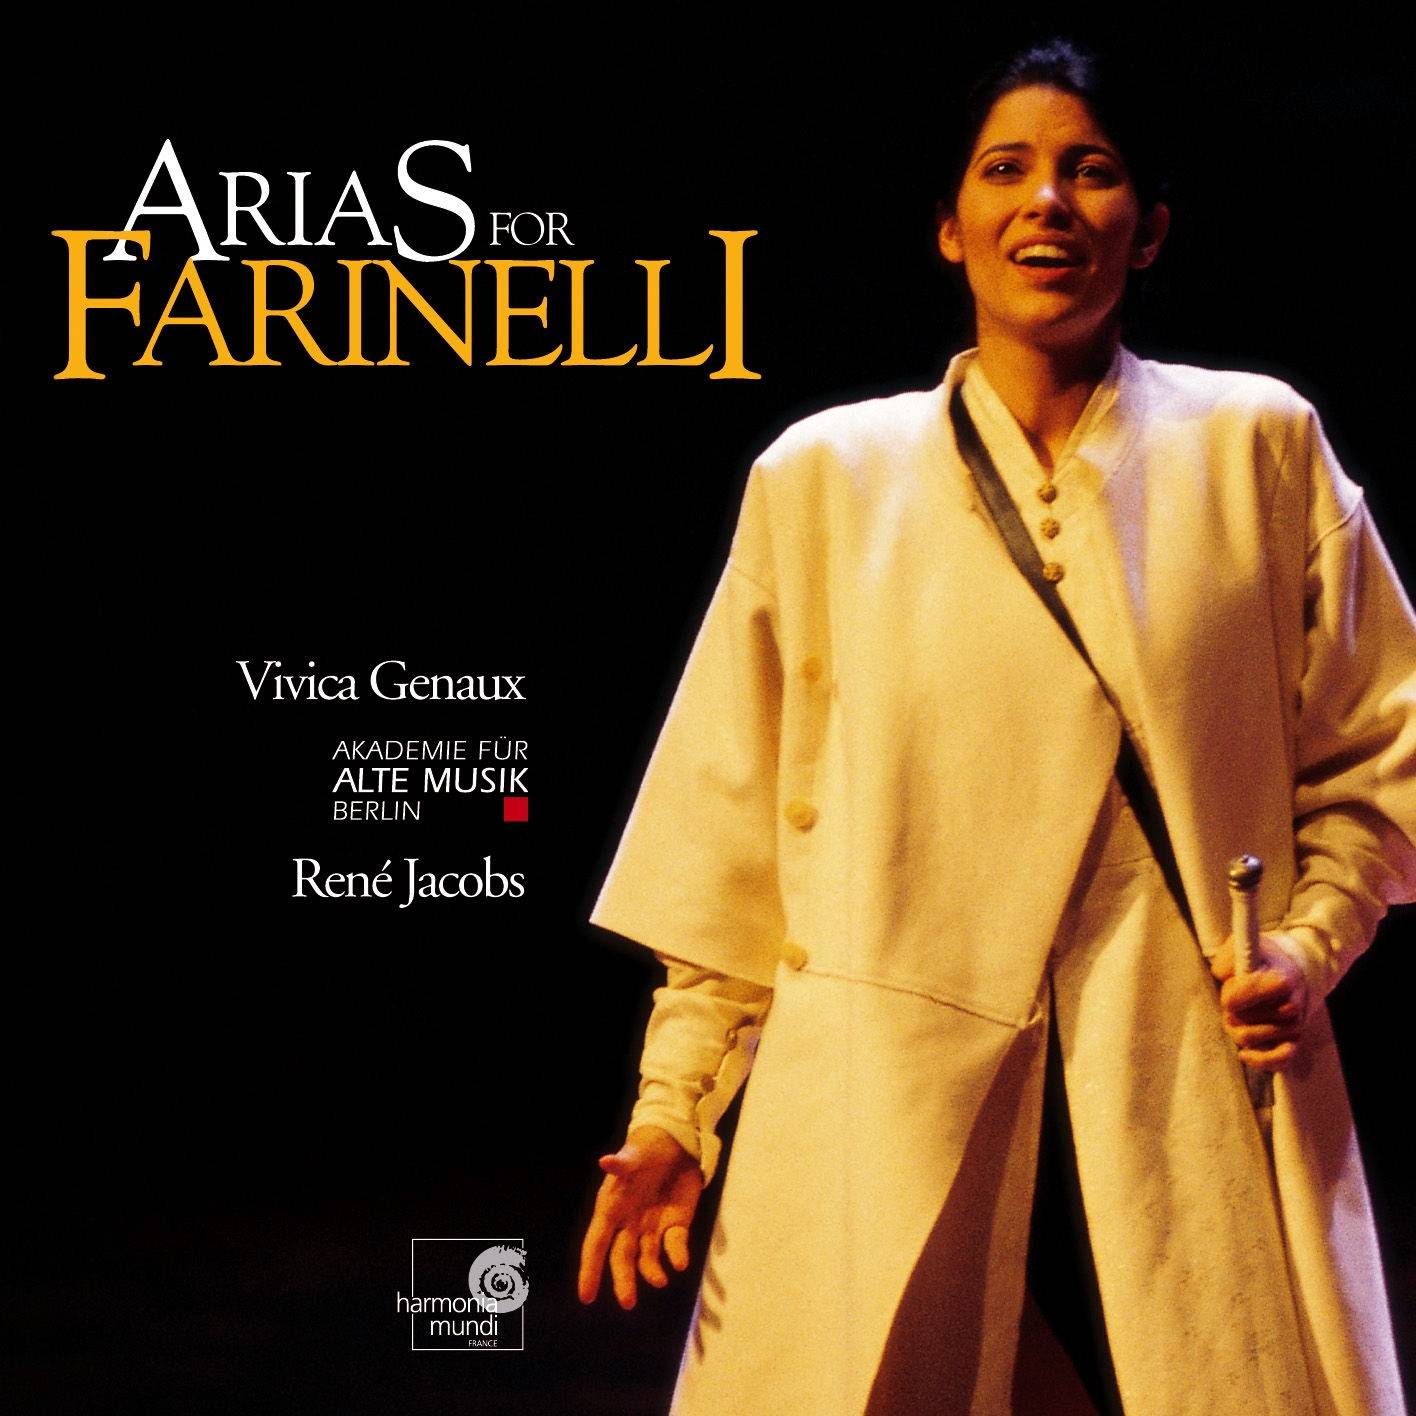 Vivica Genaux, Akademie fur Alte Musik Berlin, Rene Jacobs - Arias for Farinelli (2003) MCH SACD ISO + FLAC 24bit/88,2kHz